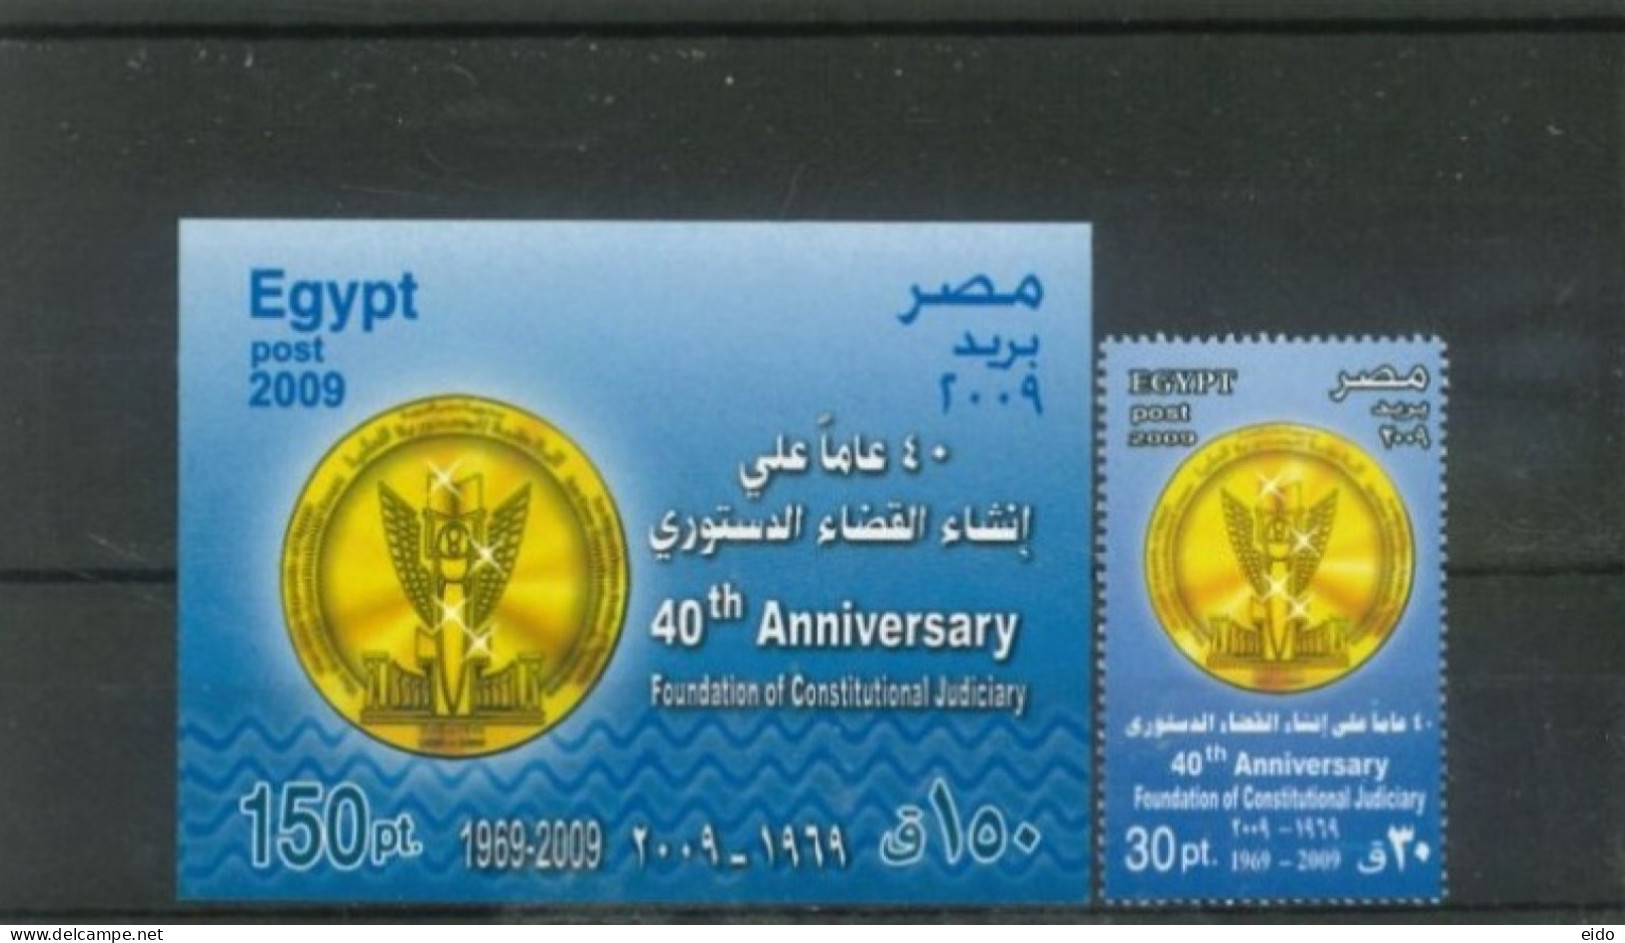 EGYPT - 2009, 40th ANNIVERSARY FOUNDATION OF CONSTITUTIONAL JUDICIARY MINIATURE STAMP SHEET & STAMP, UMM (**). - Storia Postale